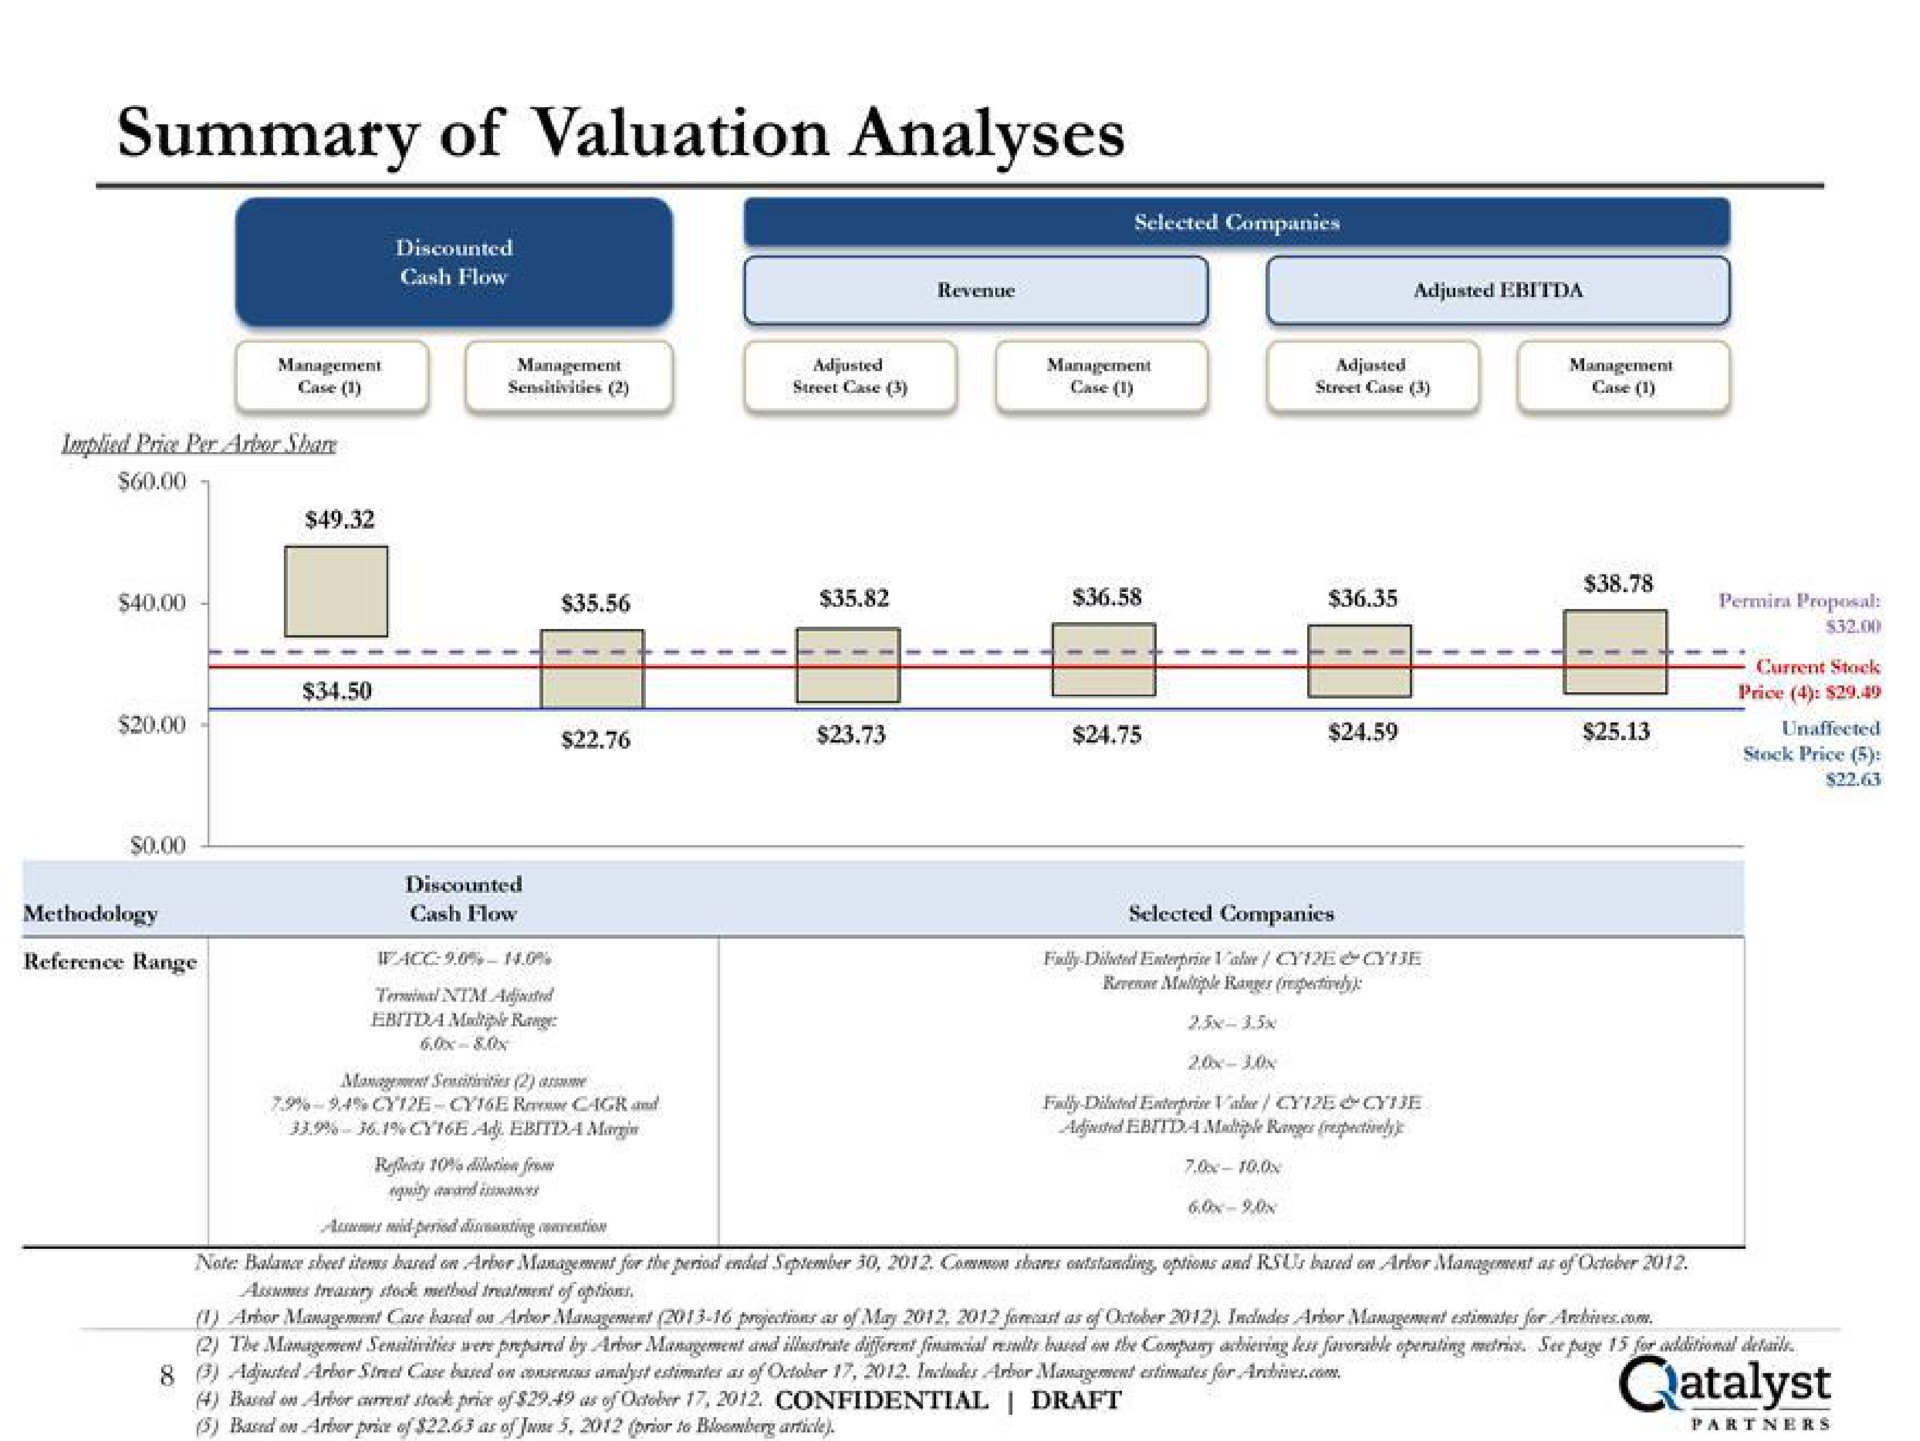 summary of valuation analyses | Qatalyst Partners